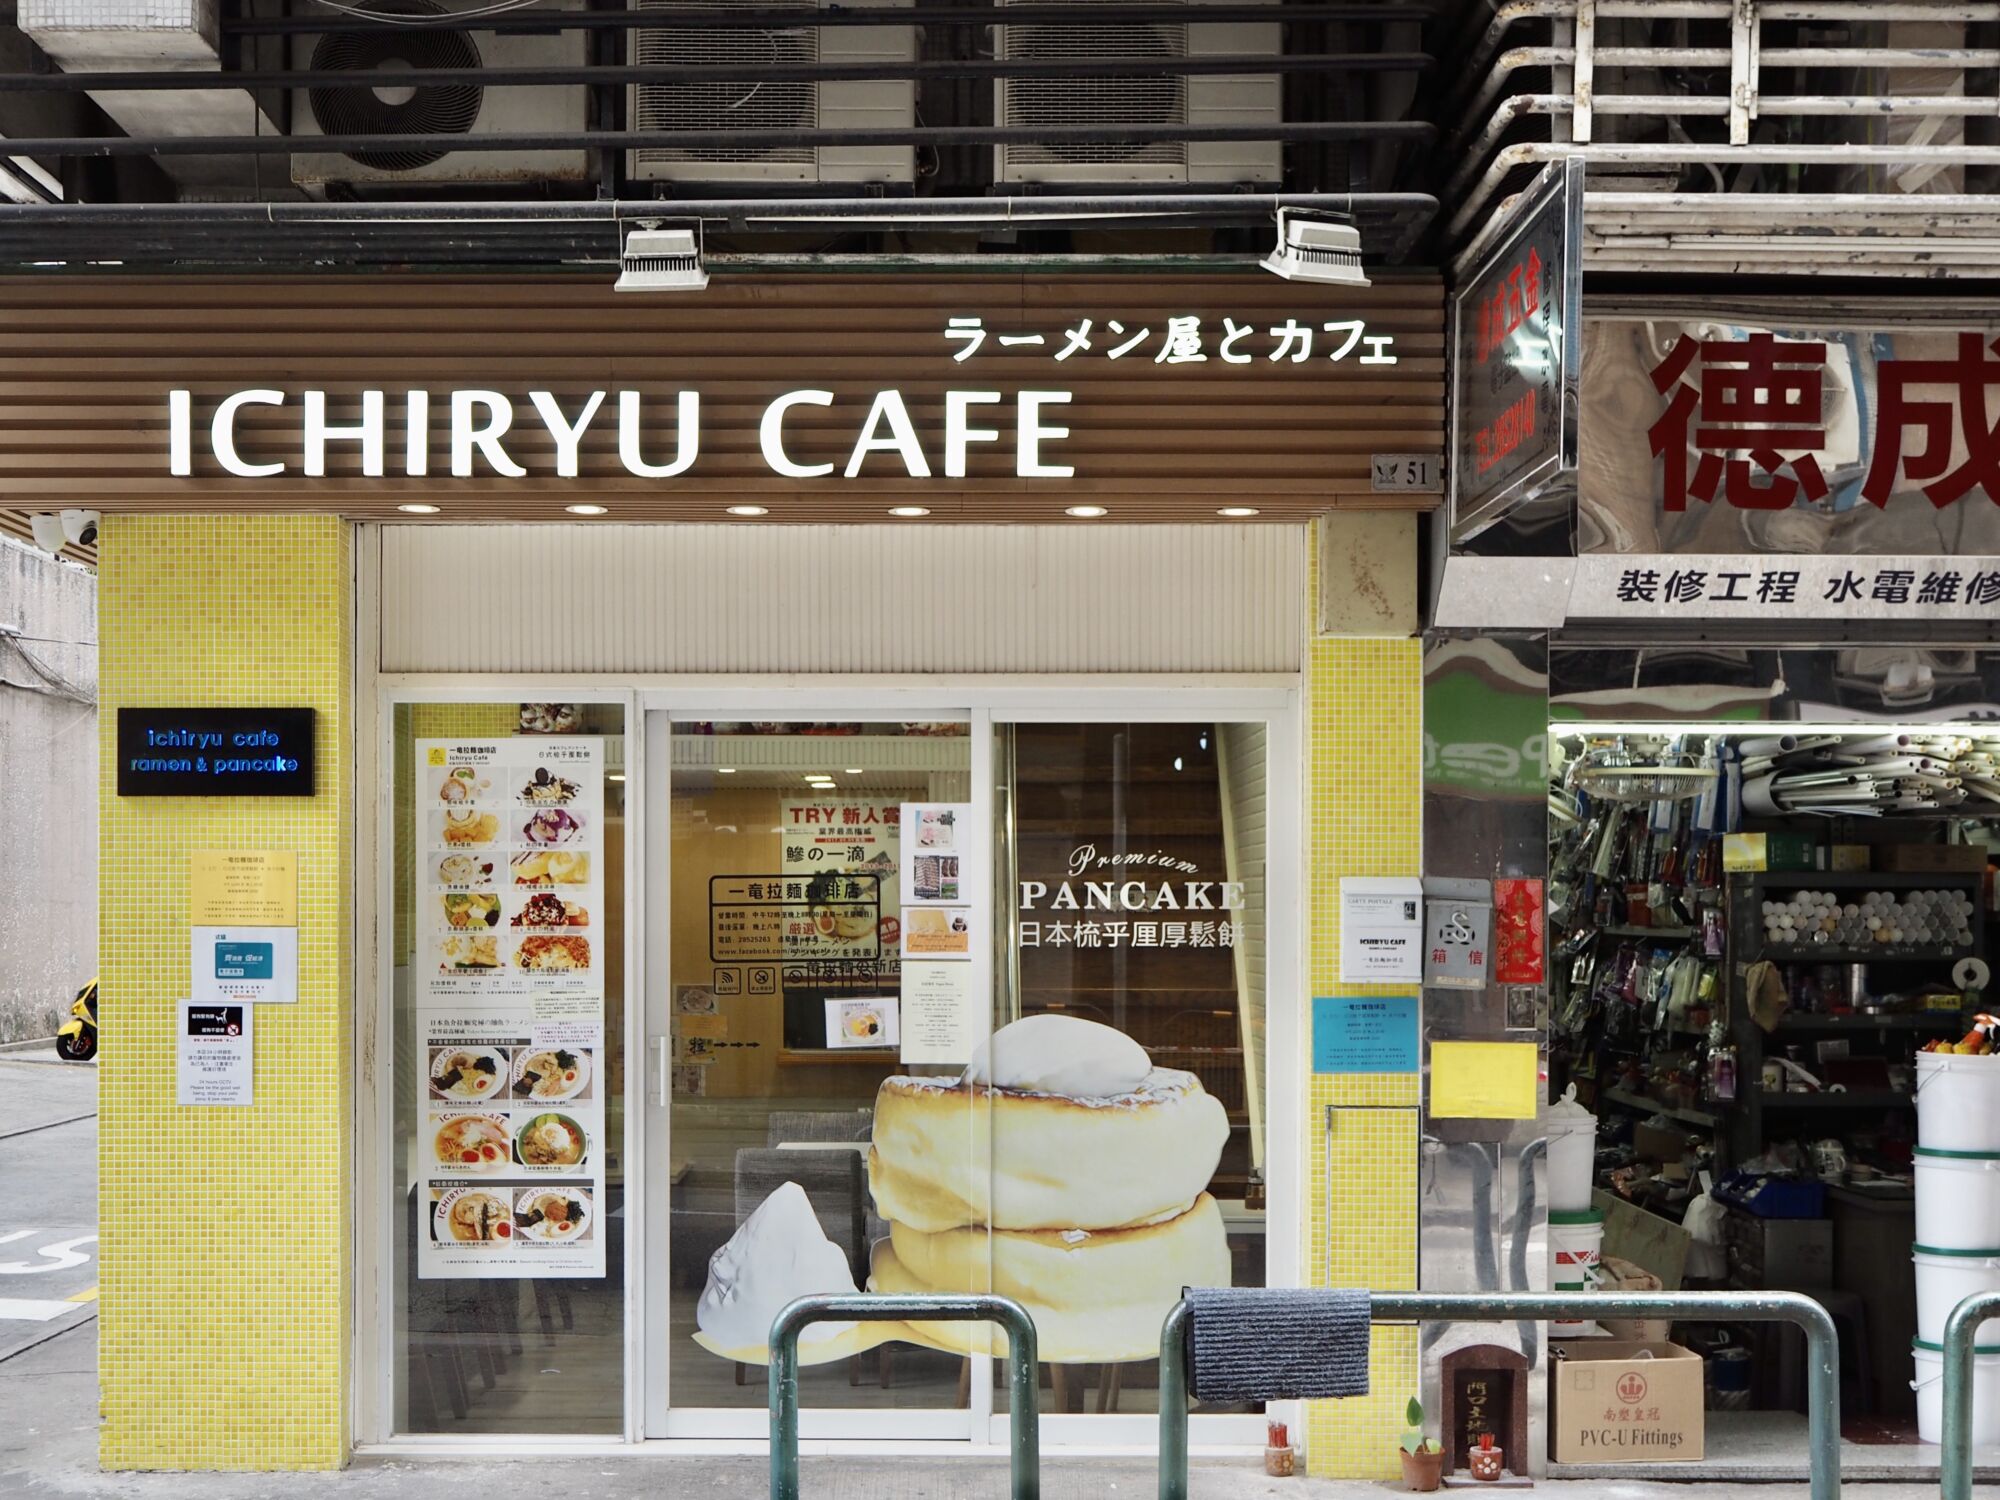 Ichiryu Cafe Horta e Costa